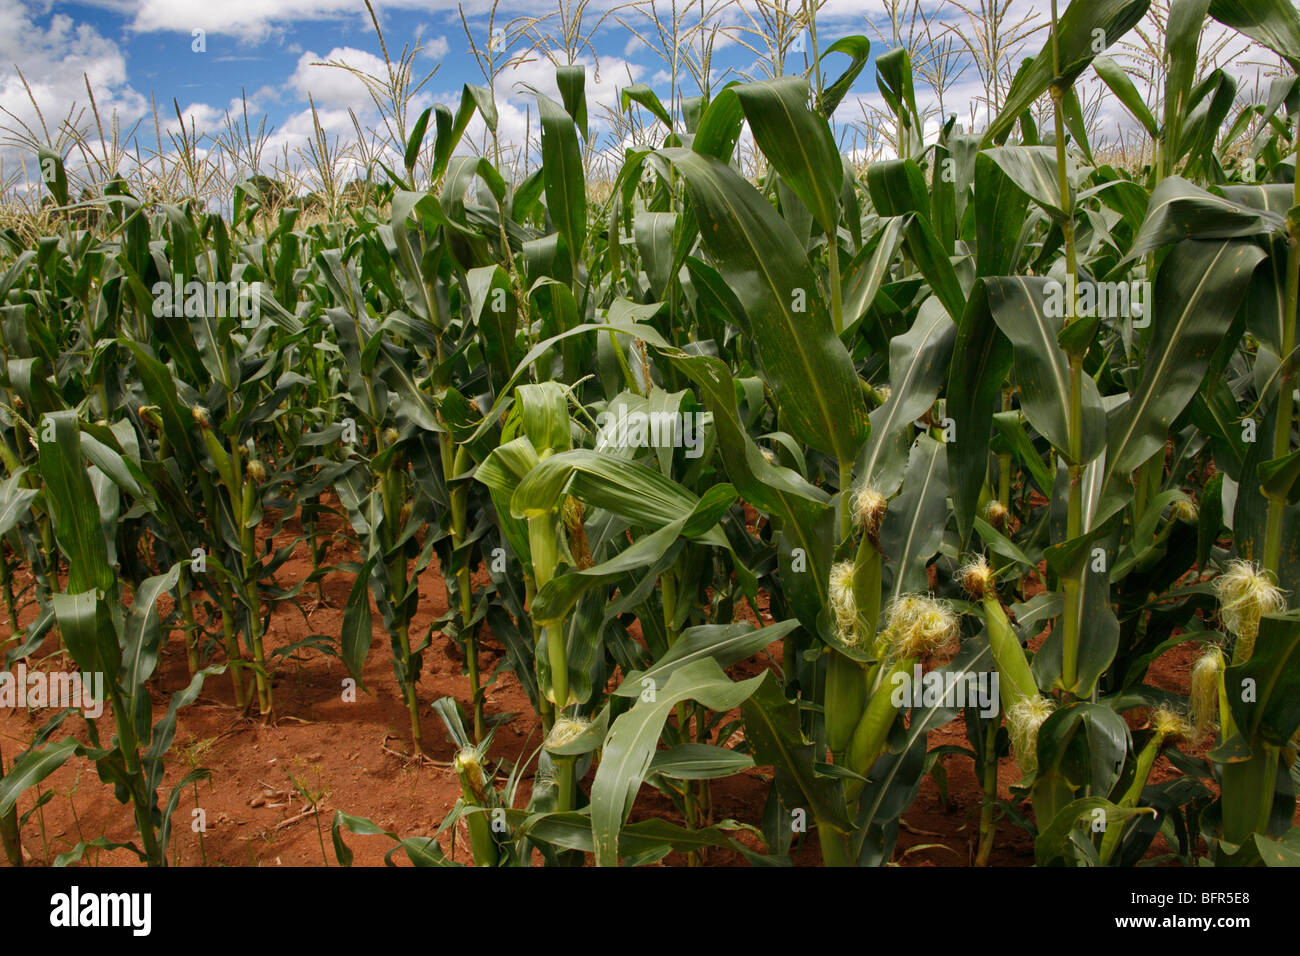 Field of Maize plants Stock Photo